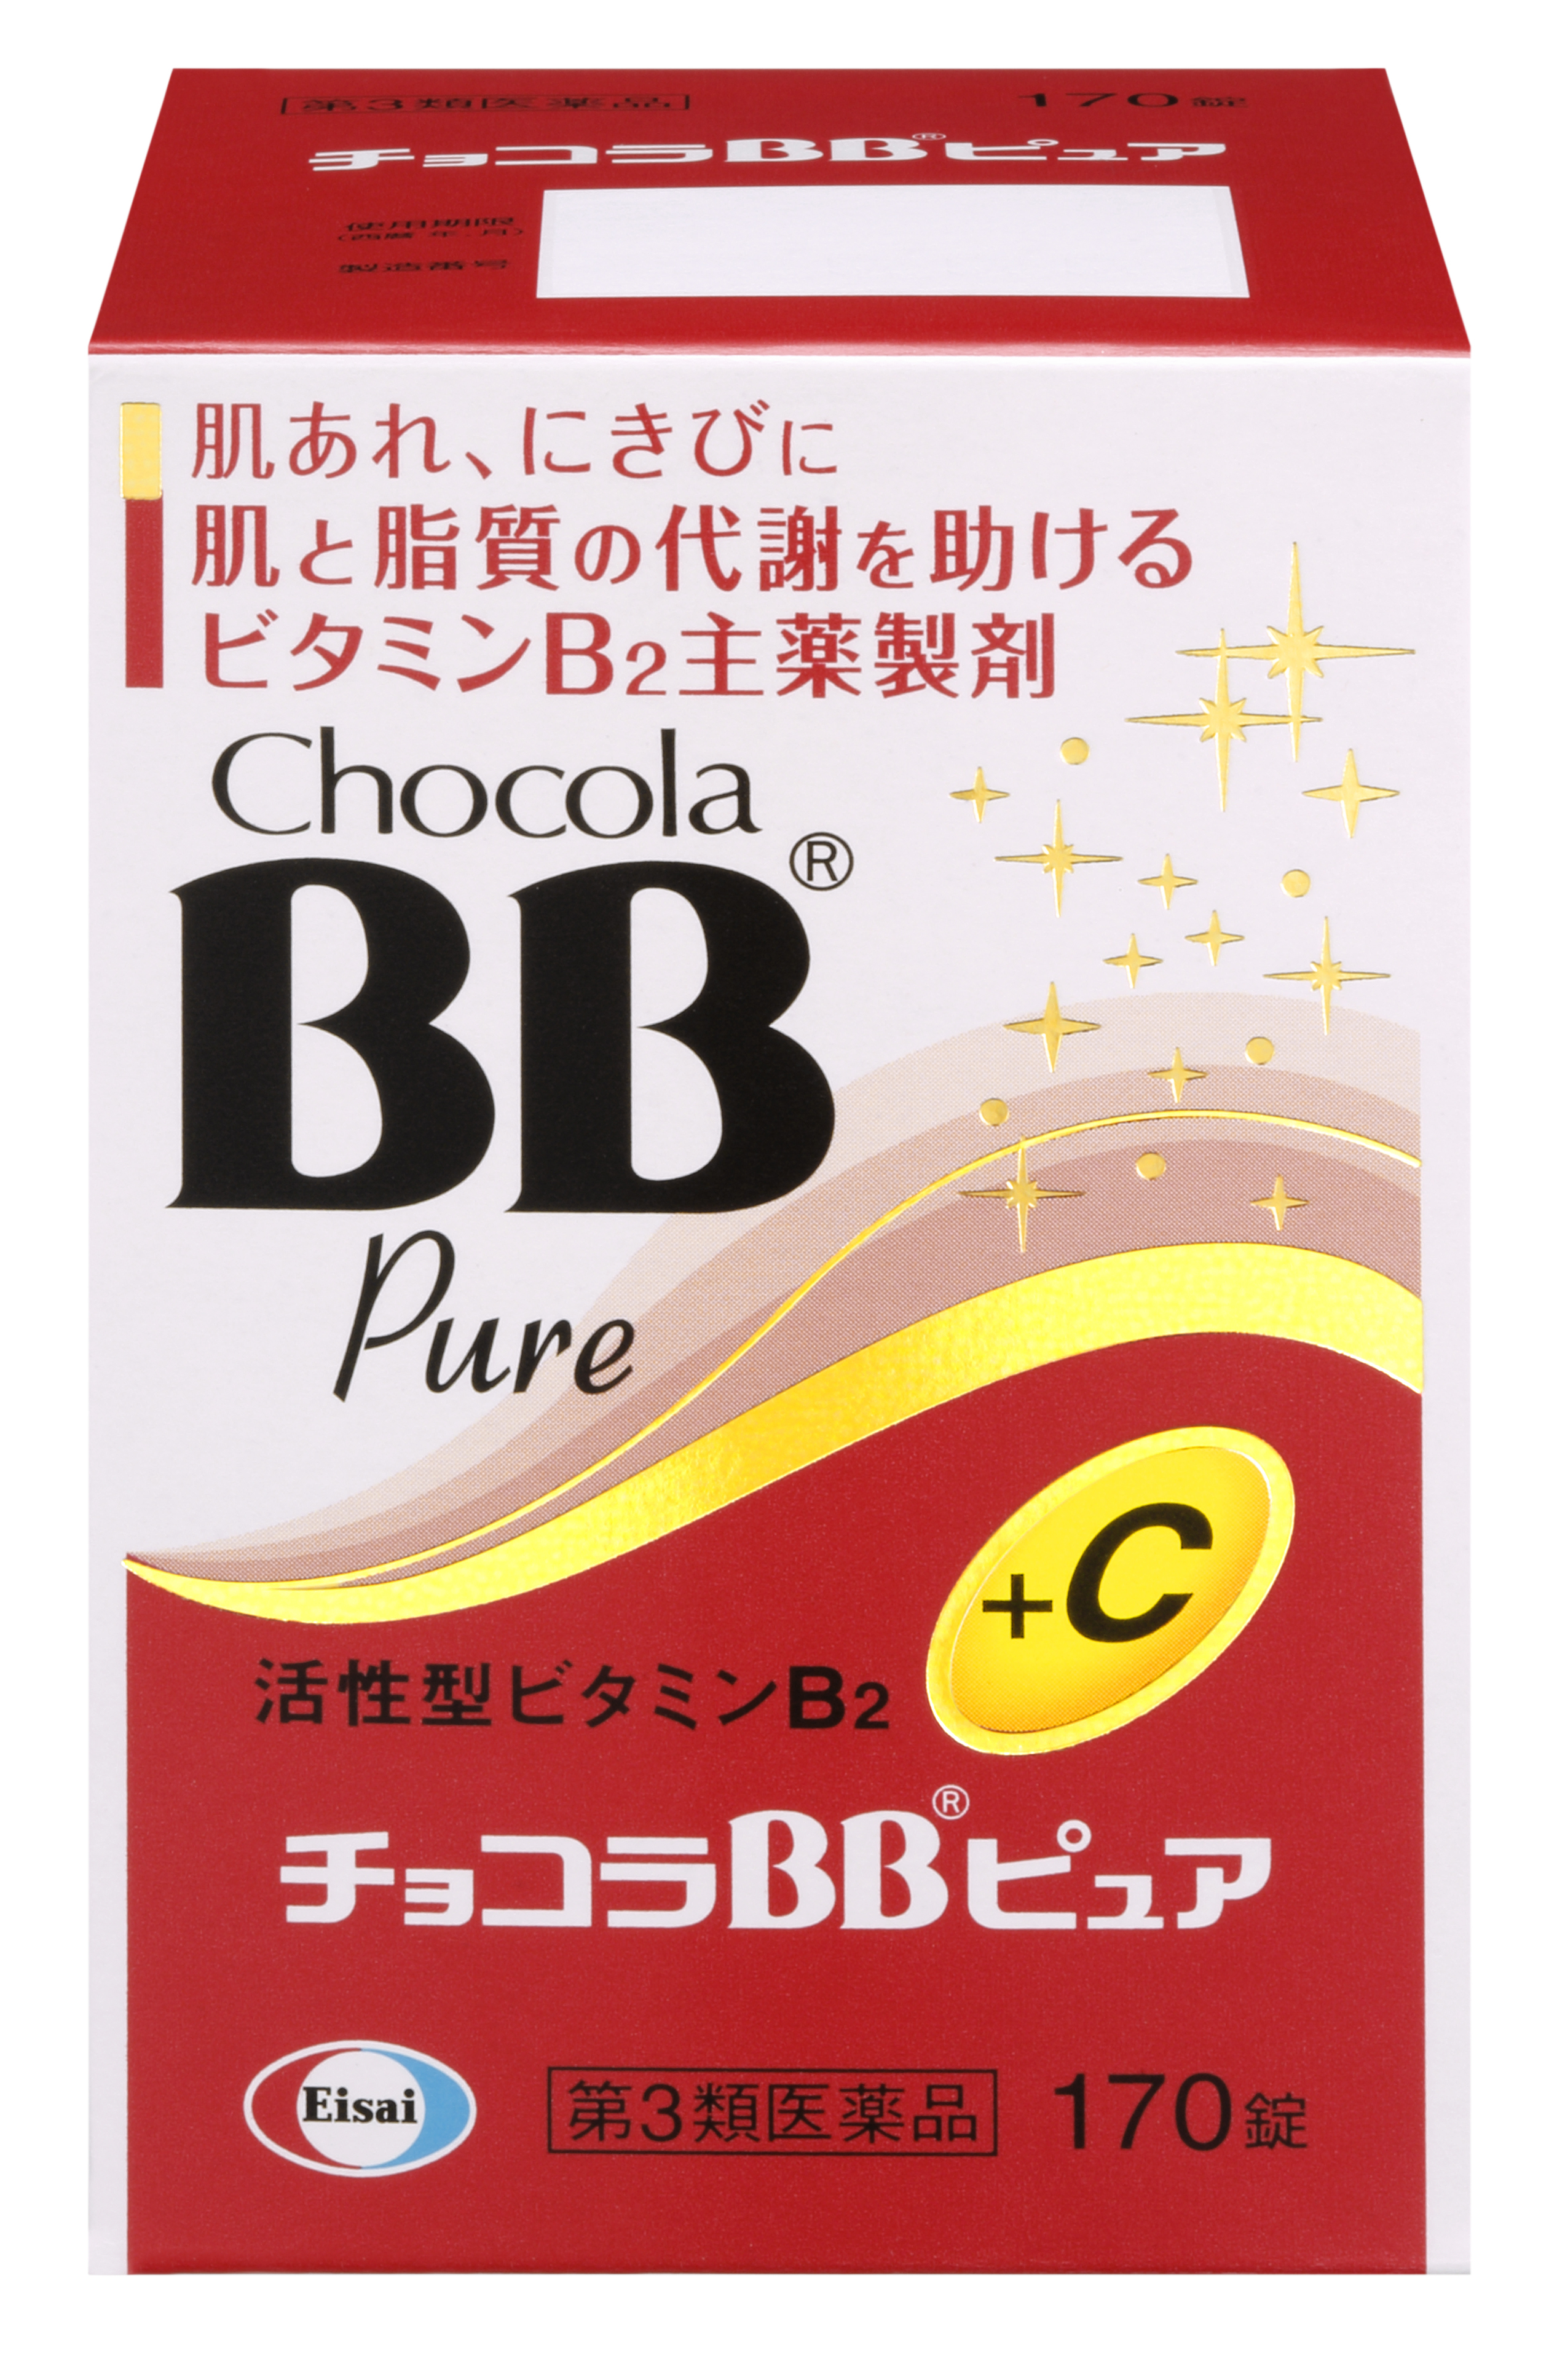 Chocola BB Pure